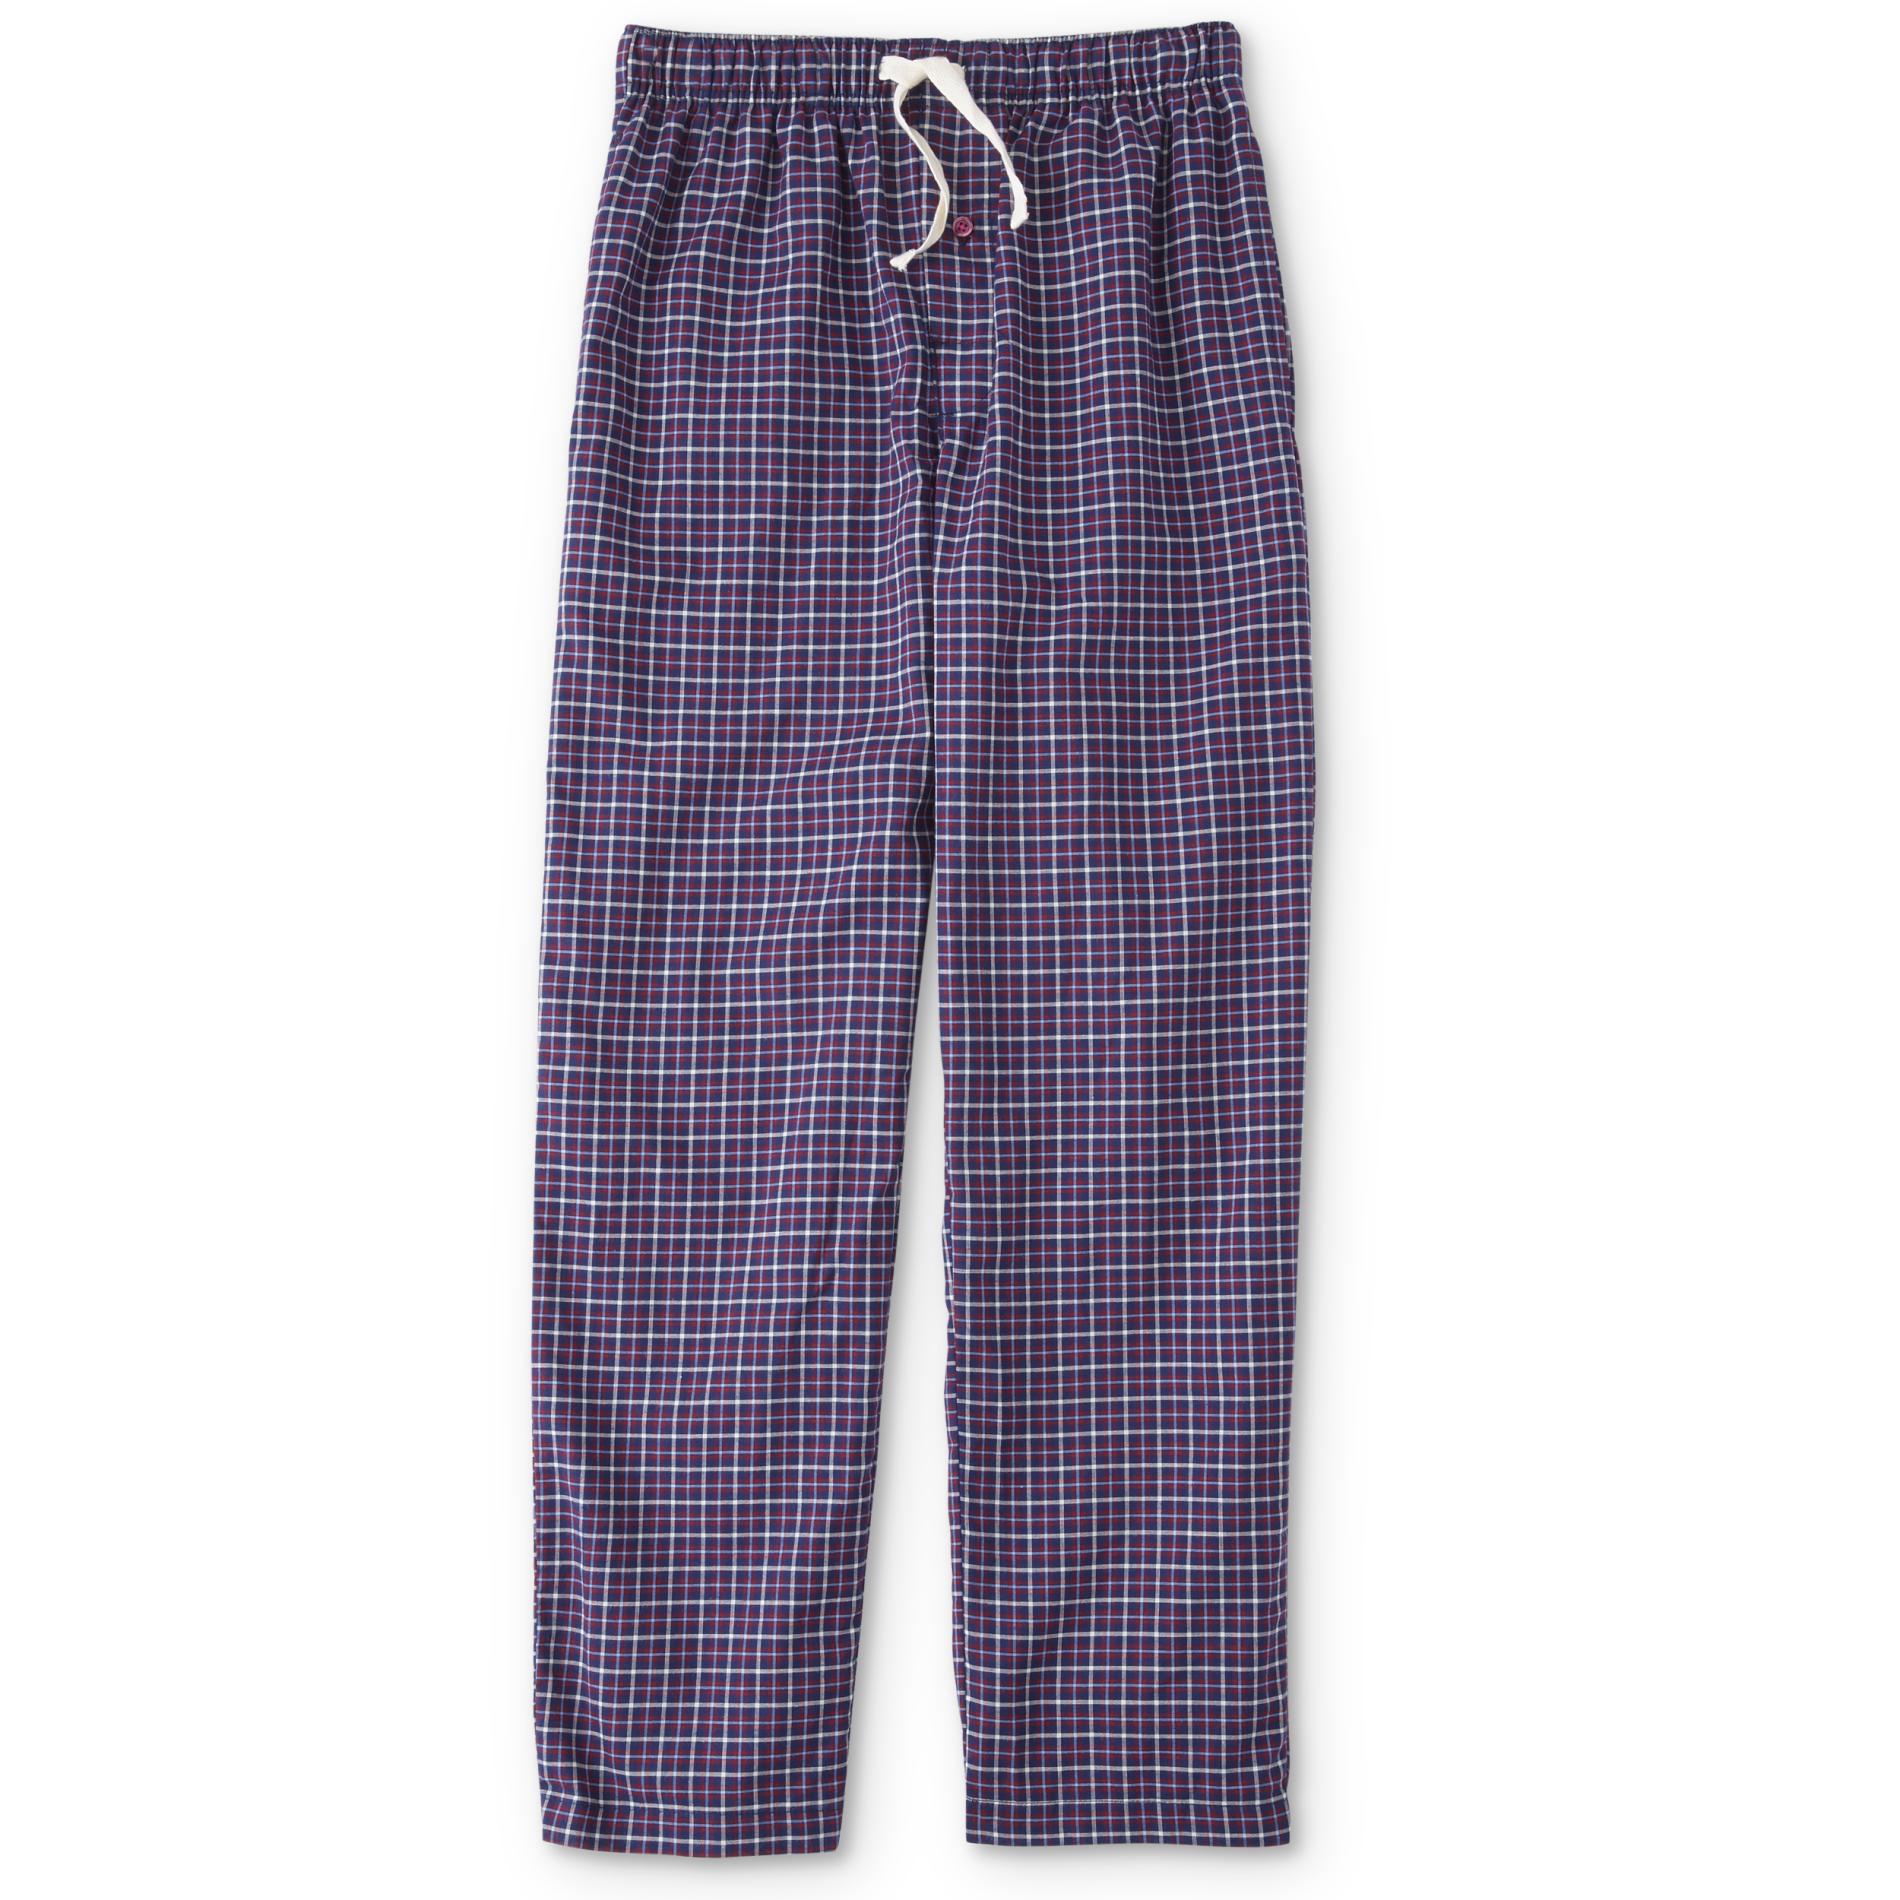 Basic Editions Men's Pajama Pants - Plaid